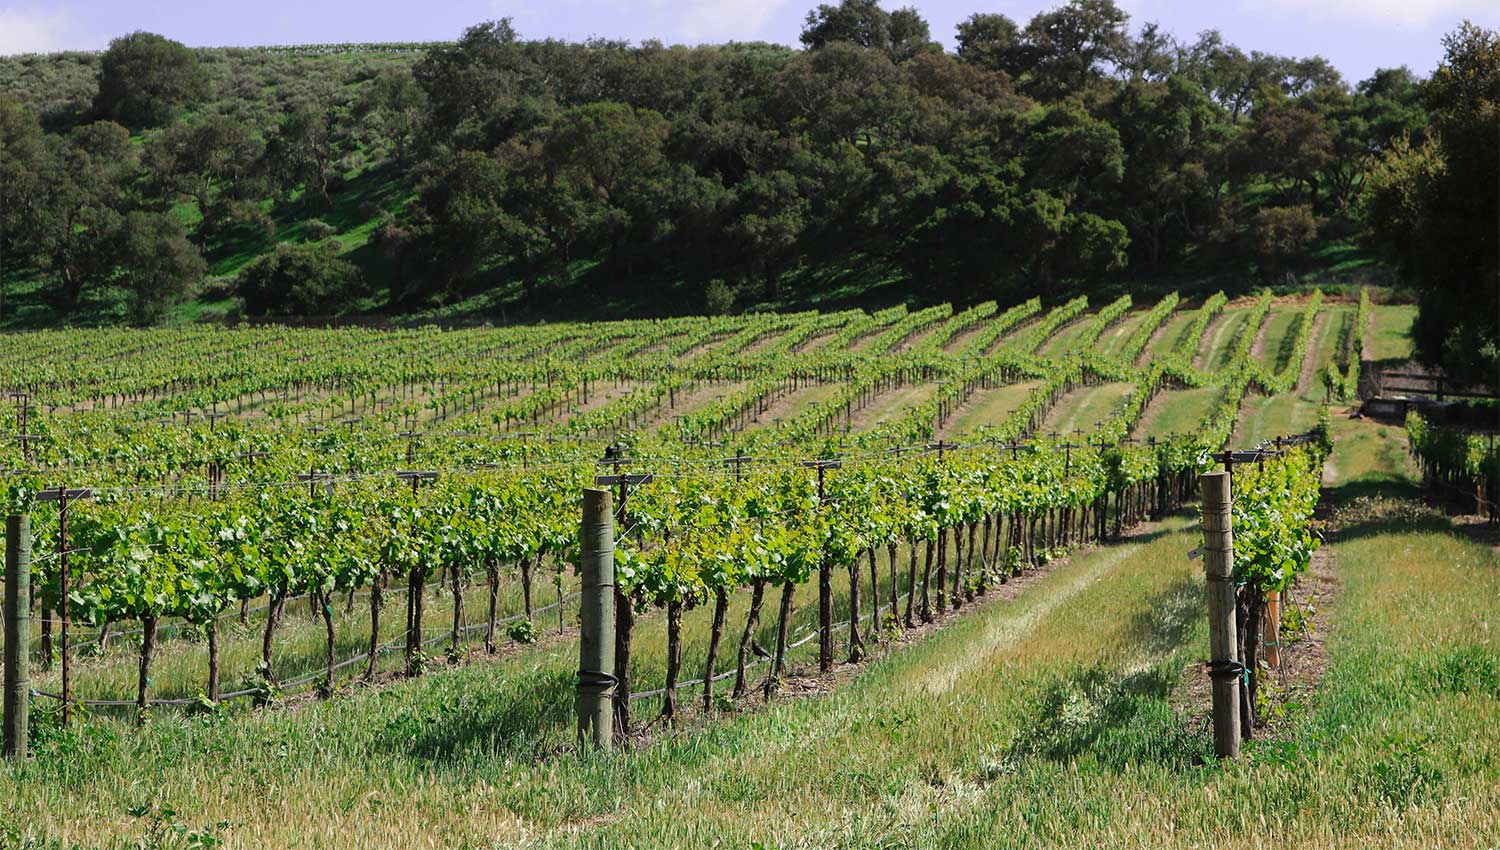 Vineyard in Santa Barbara County